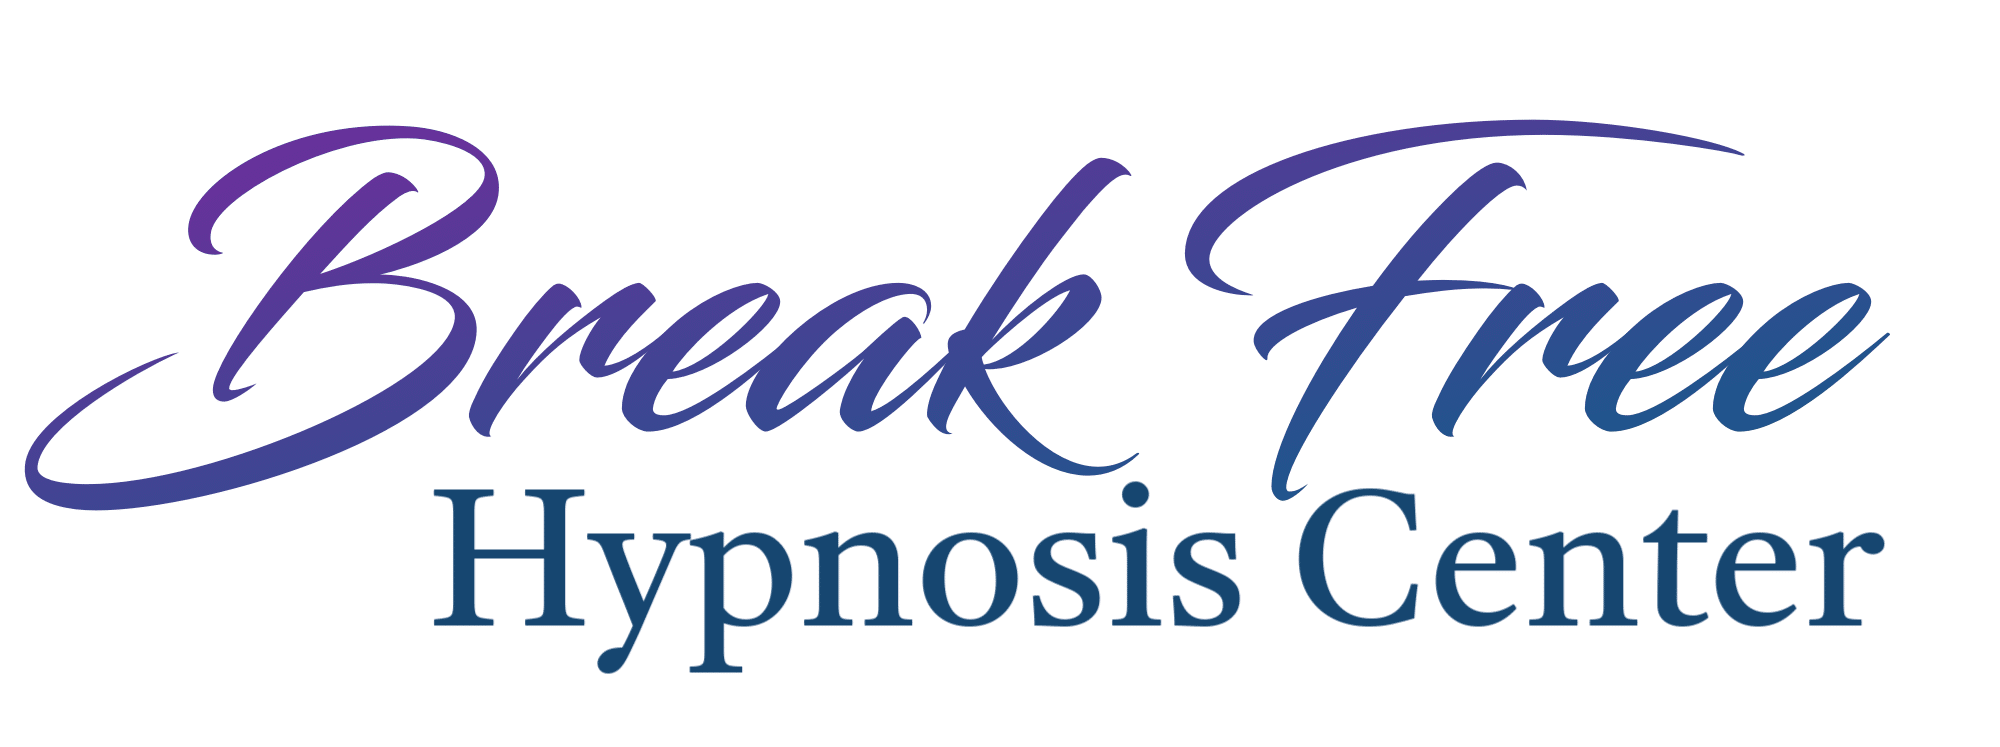 Break Free Hypnosis Center